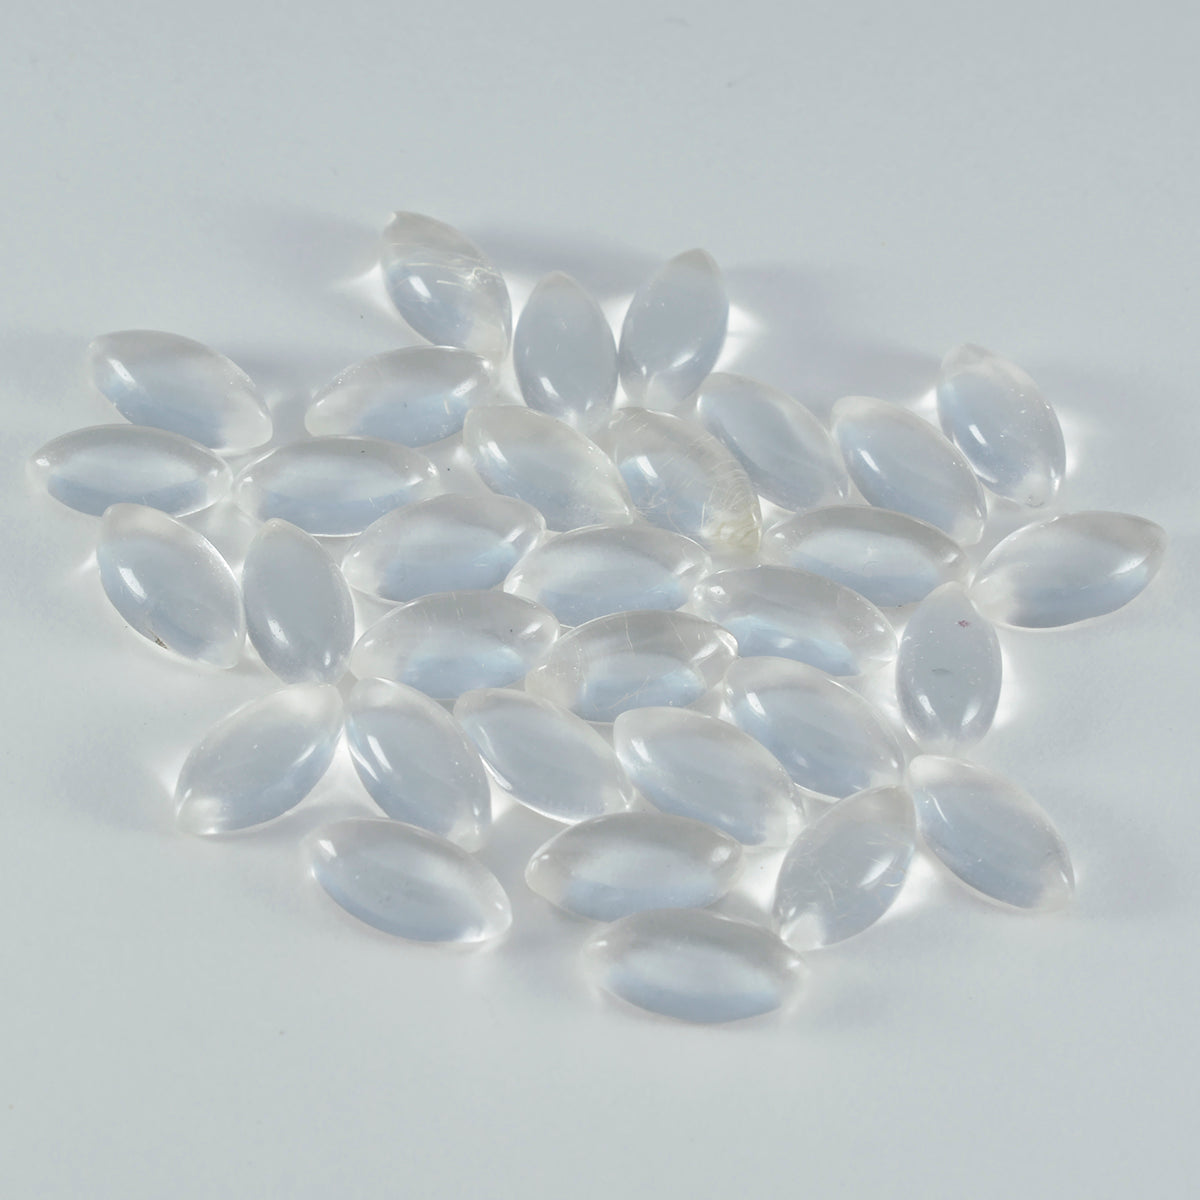 Riyogems 1PC White Crystal Quartz Cabochon 6x12 mm Marquise Shape attractive Quality Gem